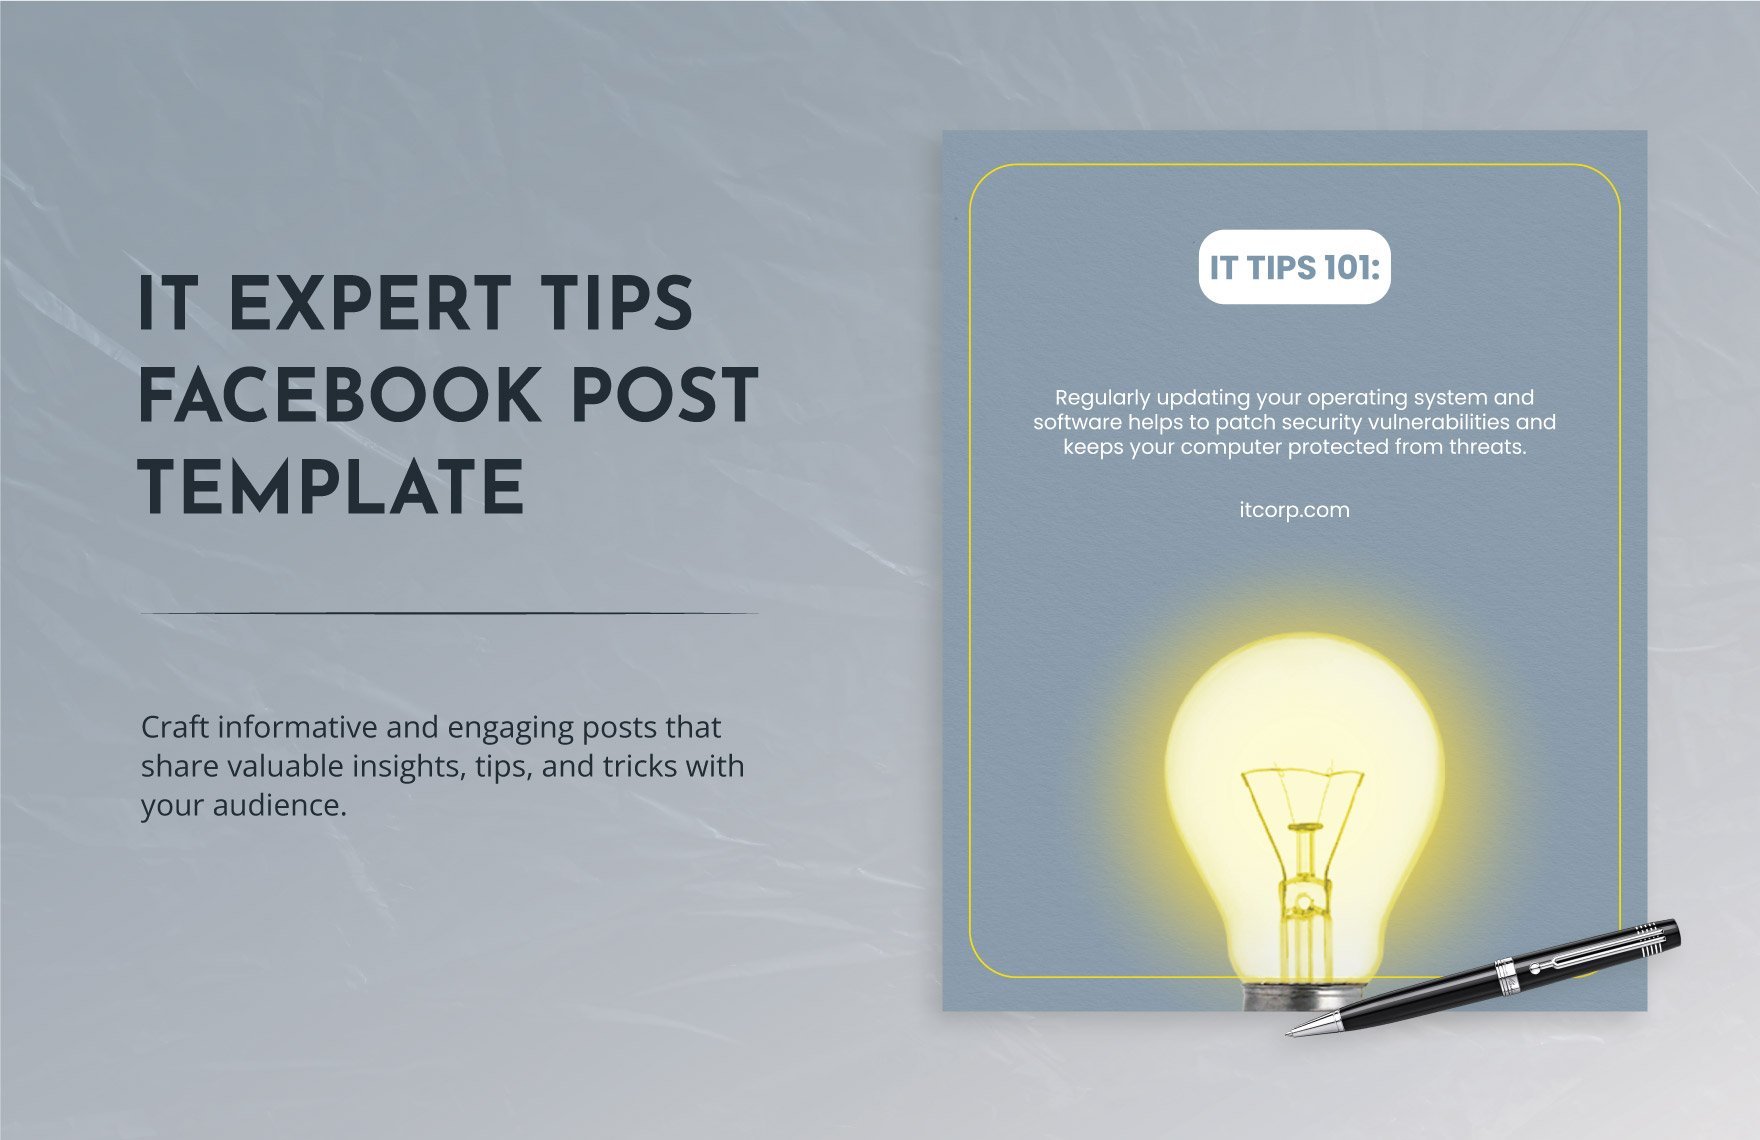 IT Expert Tips Facebook Post Template